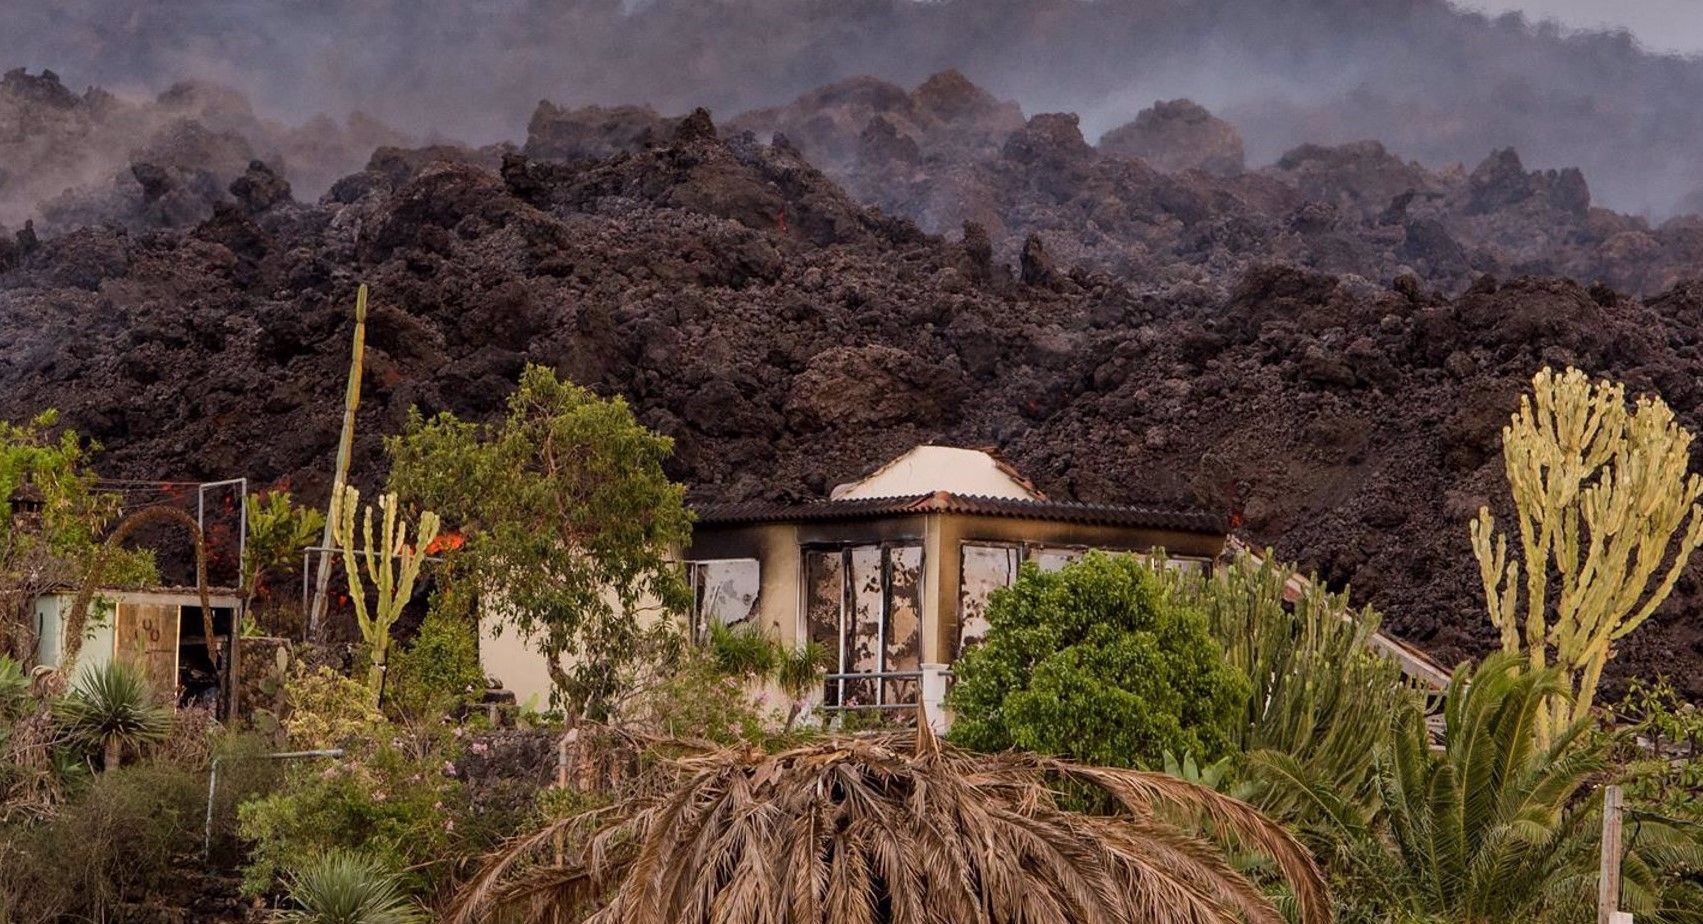 Una vivienda, apunto de ser arrasada por la lava en La Palma - Arturo Jiménez/dpa